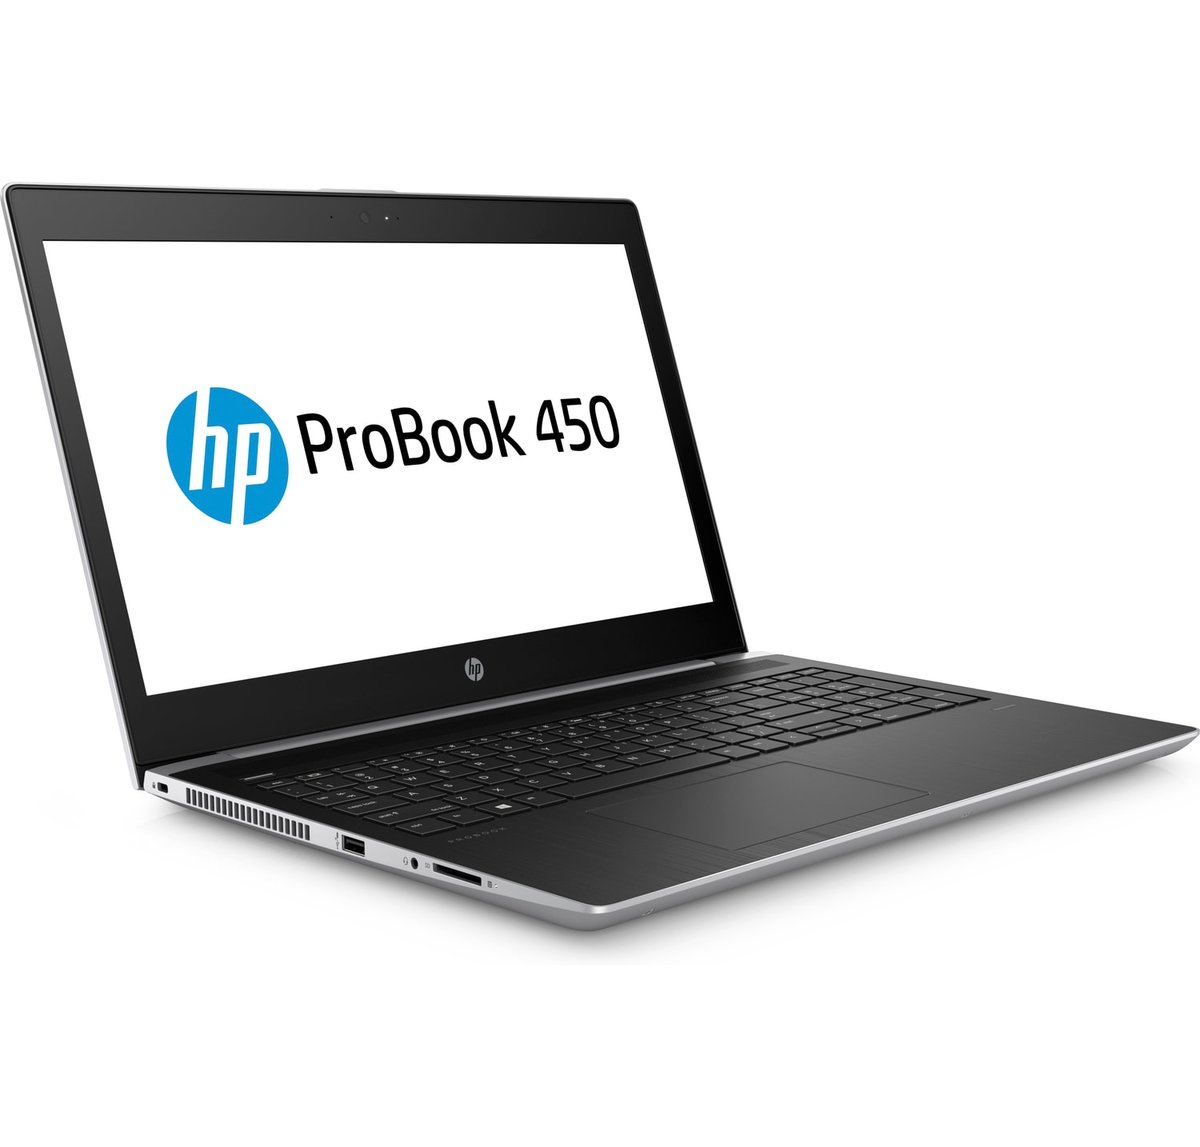 HP ProBook 450 G5 Intel Core i5-8250U, Memory 4GB, Storage 500GB 